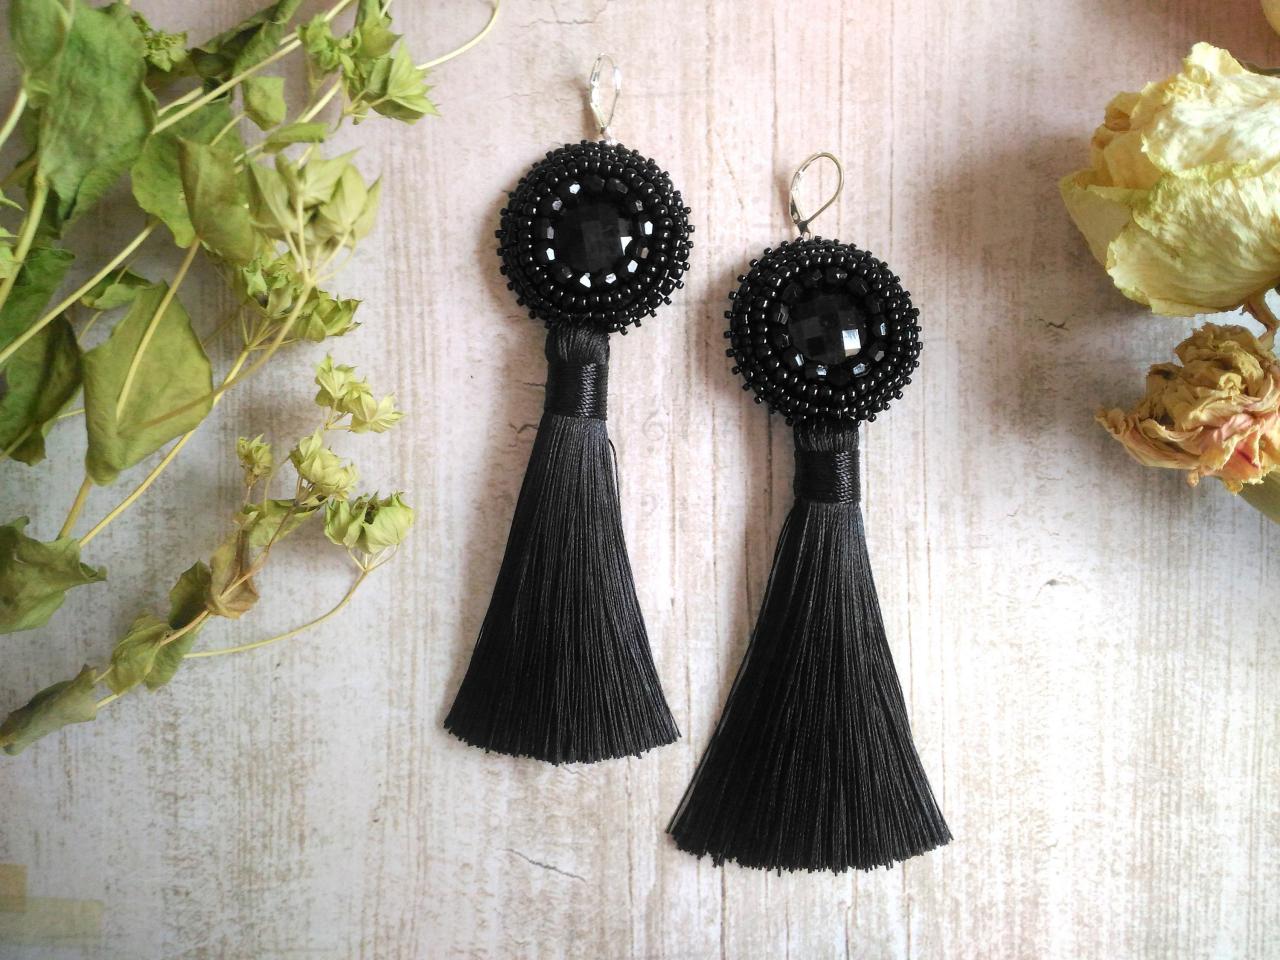 Black Tassel Earrings, Long Bead Embroidered Cabochon Earrings, Elegant Black Earrings, Dainty Beadwork Earrings With Tassel,5 Inch Earrings